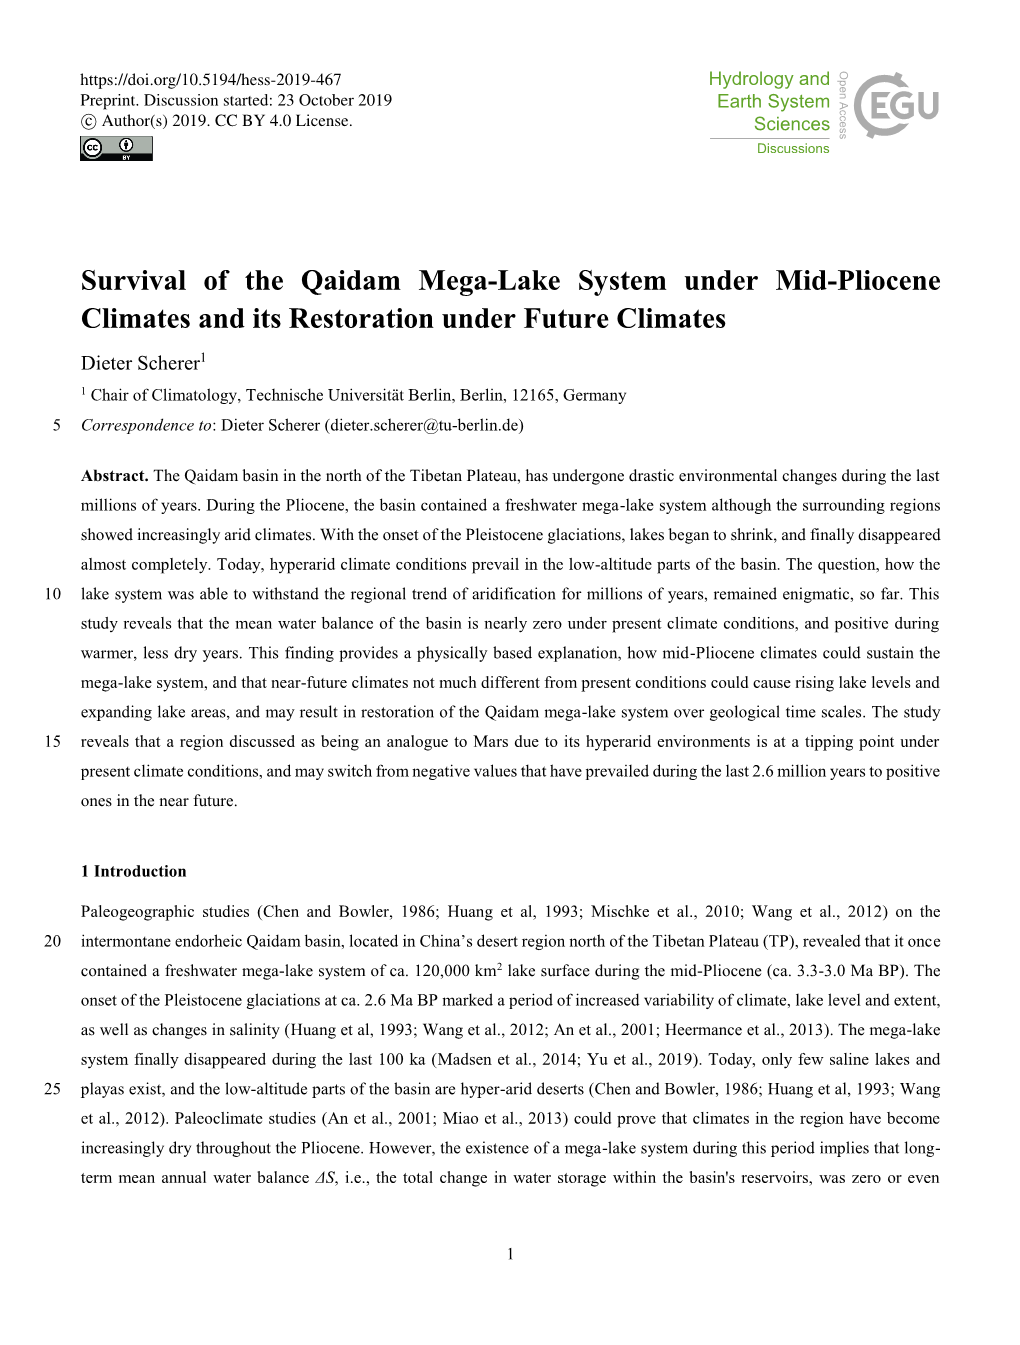 Survival of the Qaidam Mega-Lake System Under Mid-Pliocene Climates and Its Restoration Under Future Climates